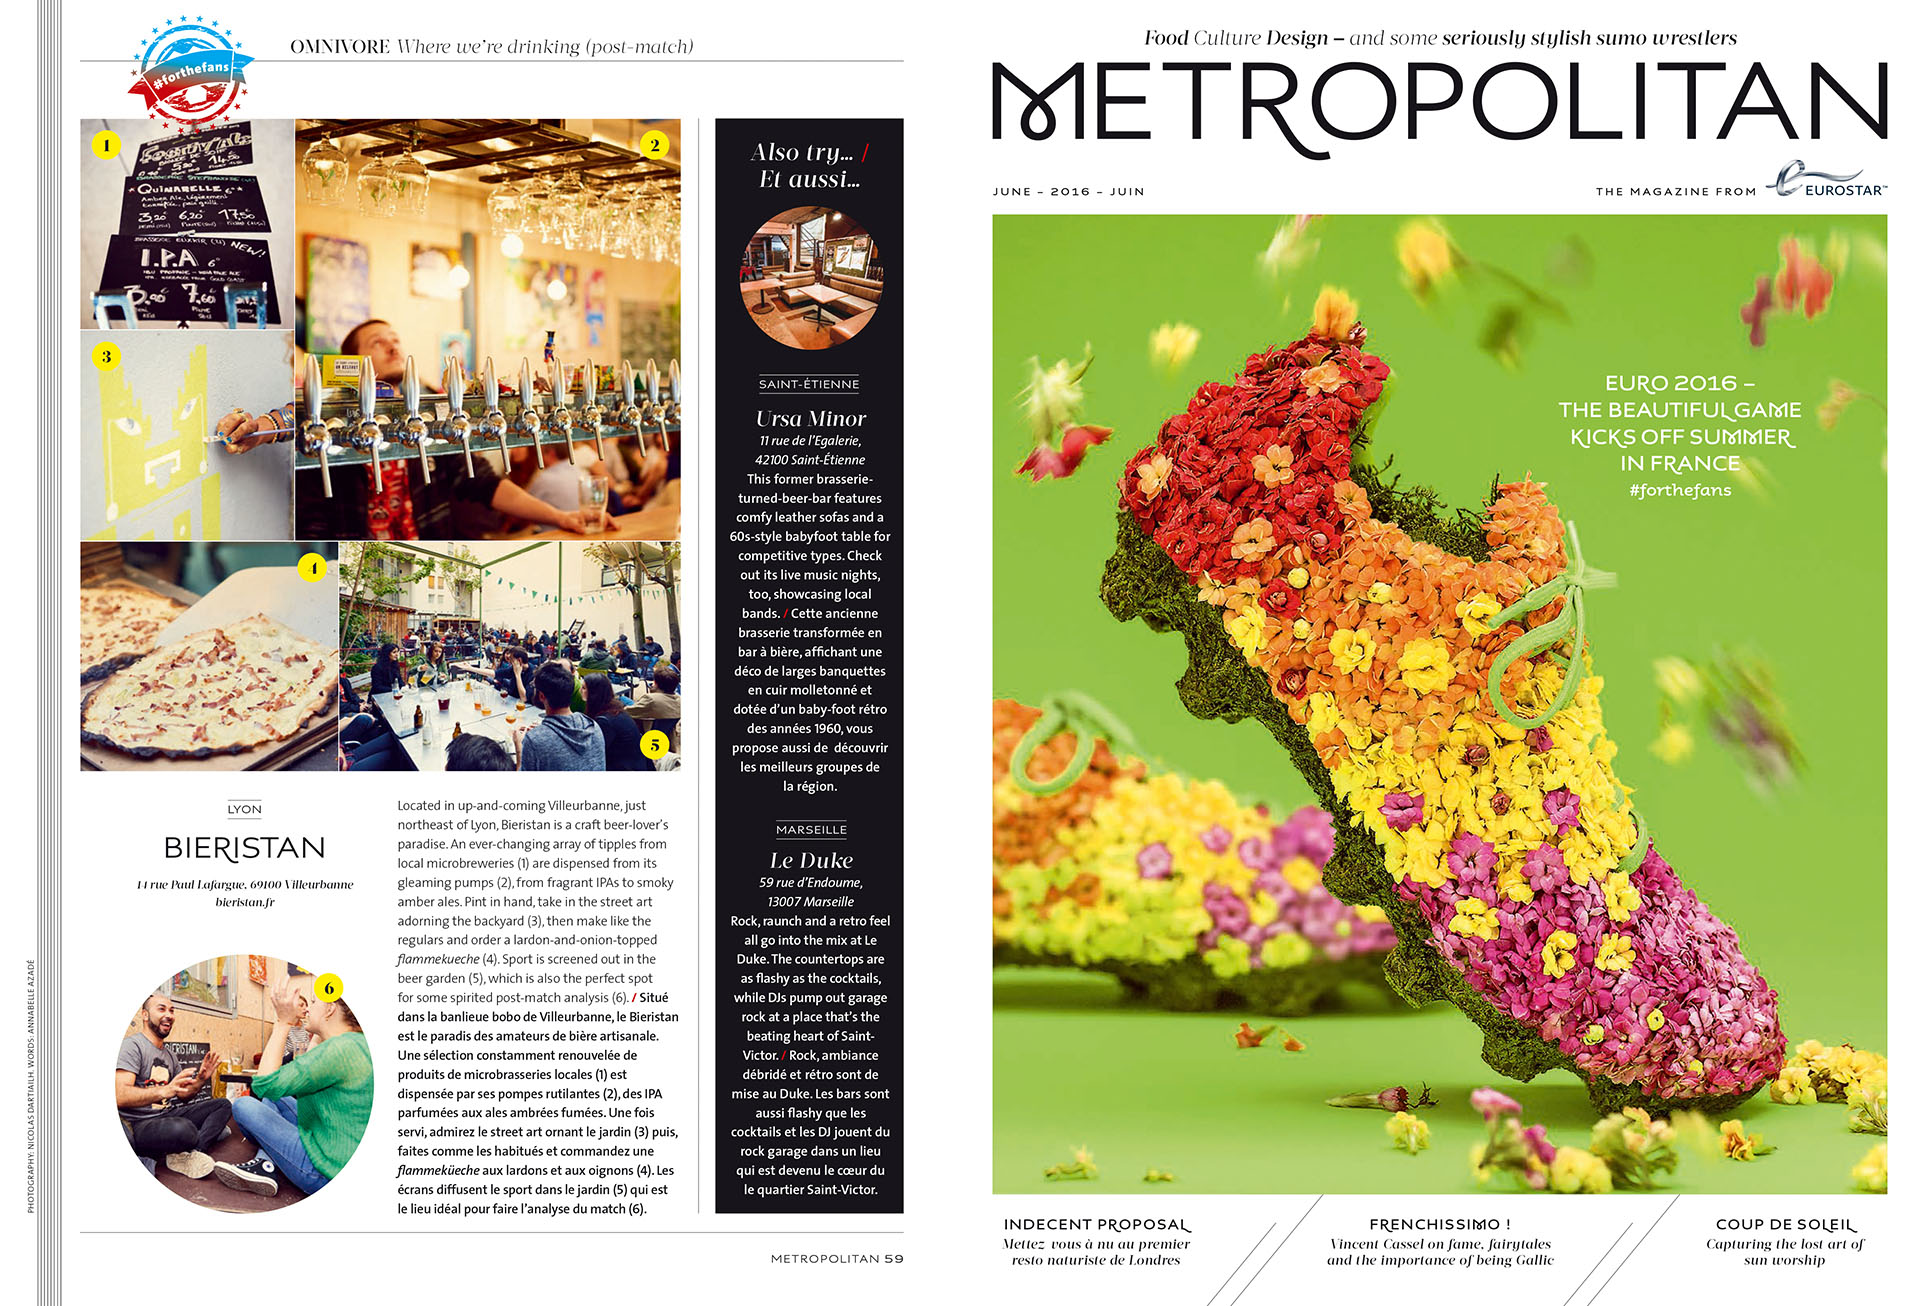 Eurostar Magazine - Metropolitan - Where we're drinking - Juin 2016